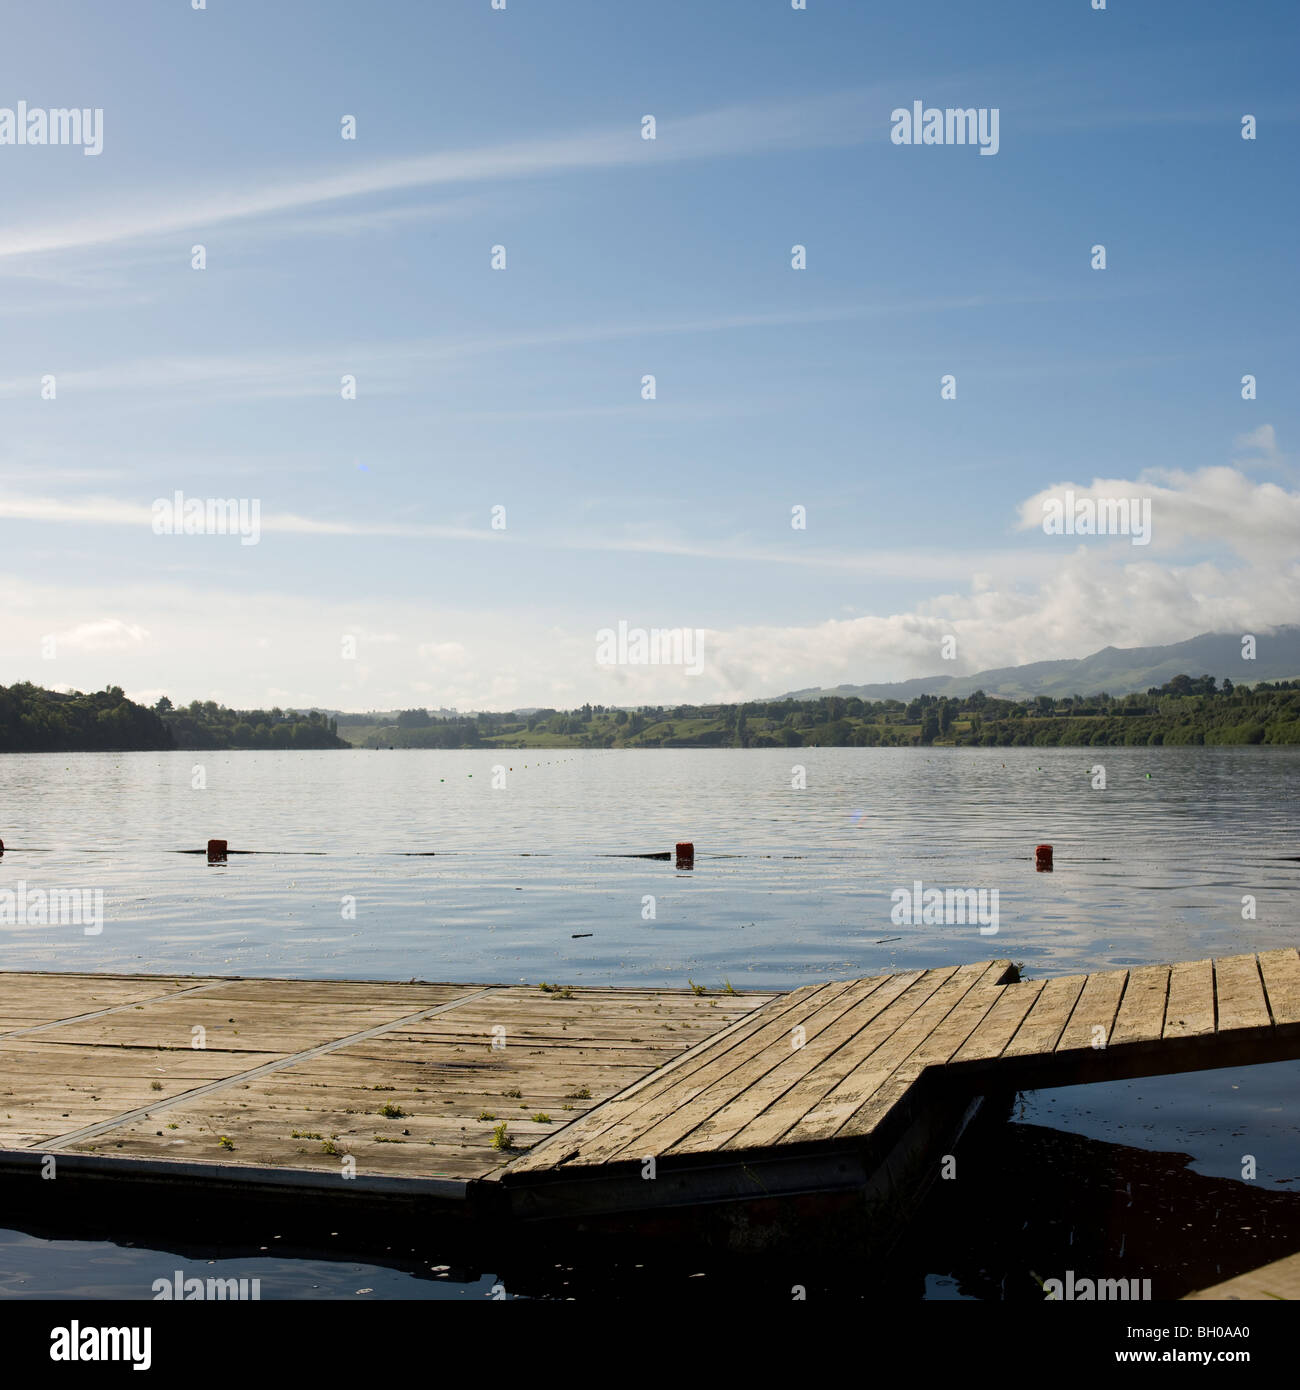 Floating Jetty Or Gangplank On Lake Karipiro New Zealand Stock Photo Alamy